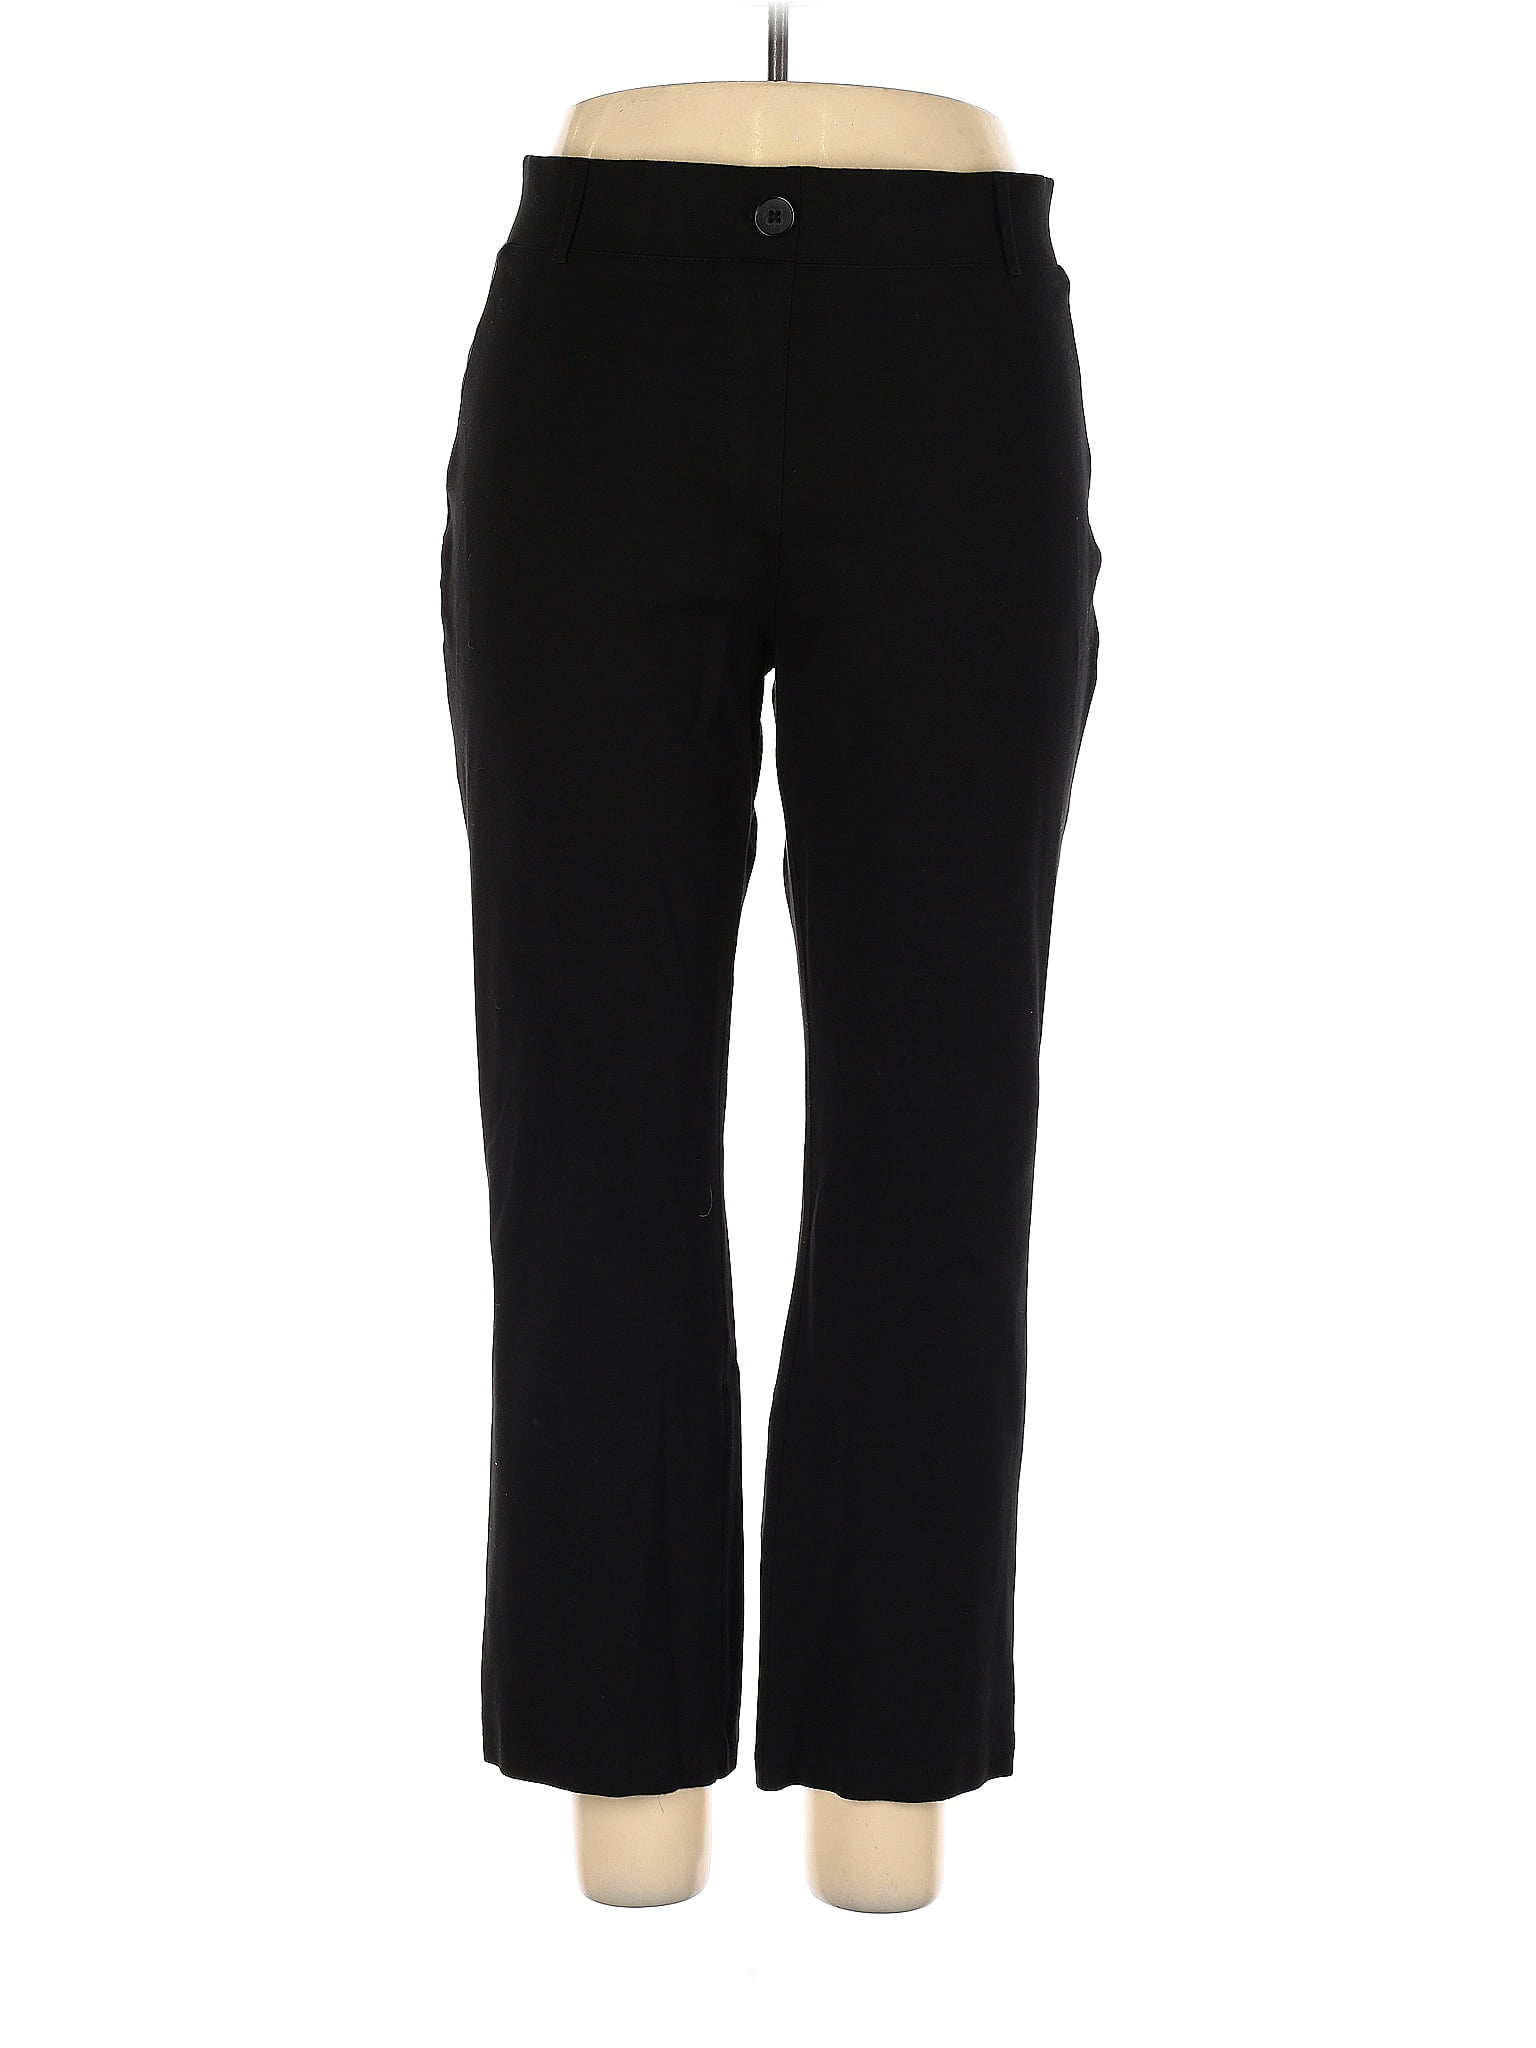 Betabrand Black Dress Pants Size 2X (Plus) - 67% off | thredUP